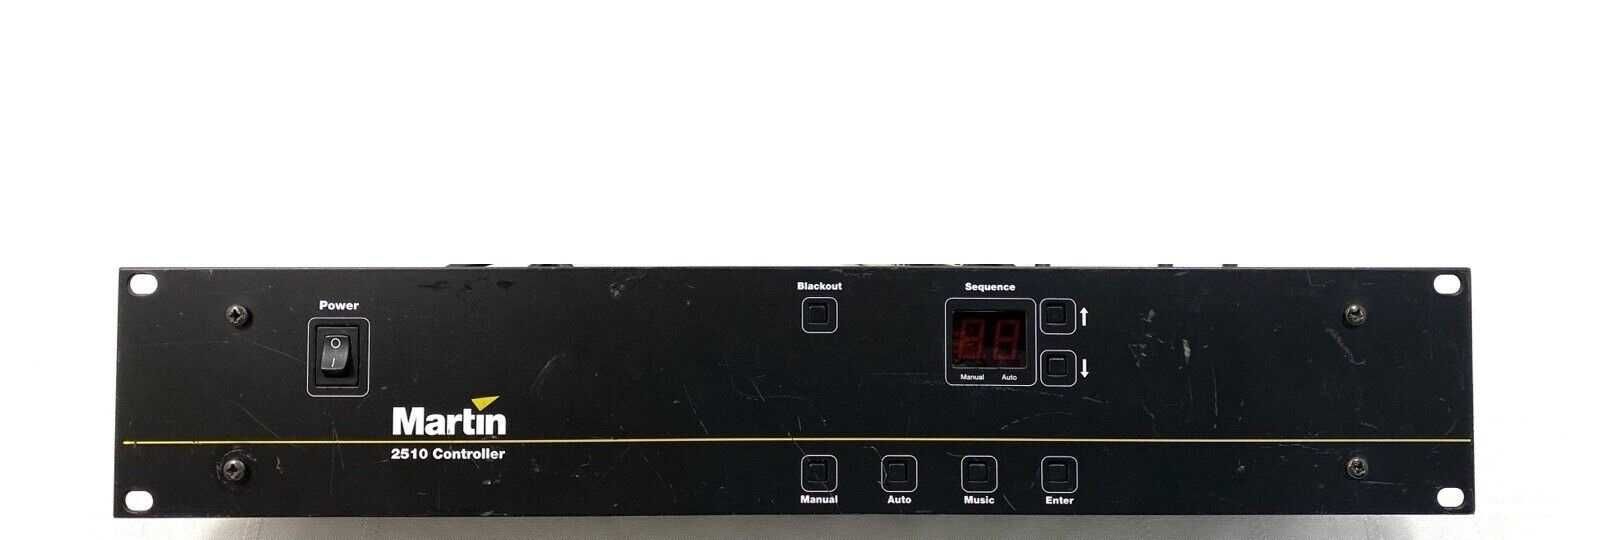 DMX Lumini MARTIN LIGHT 2510 Controller